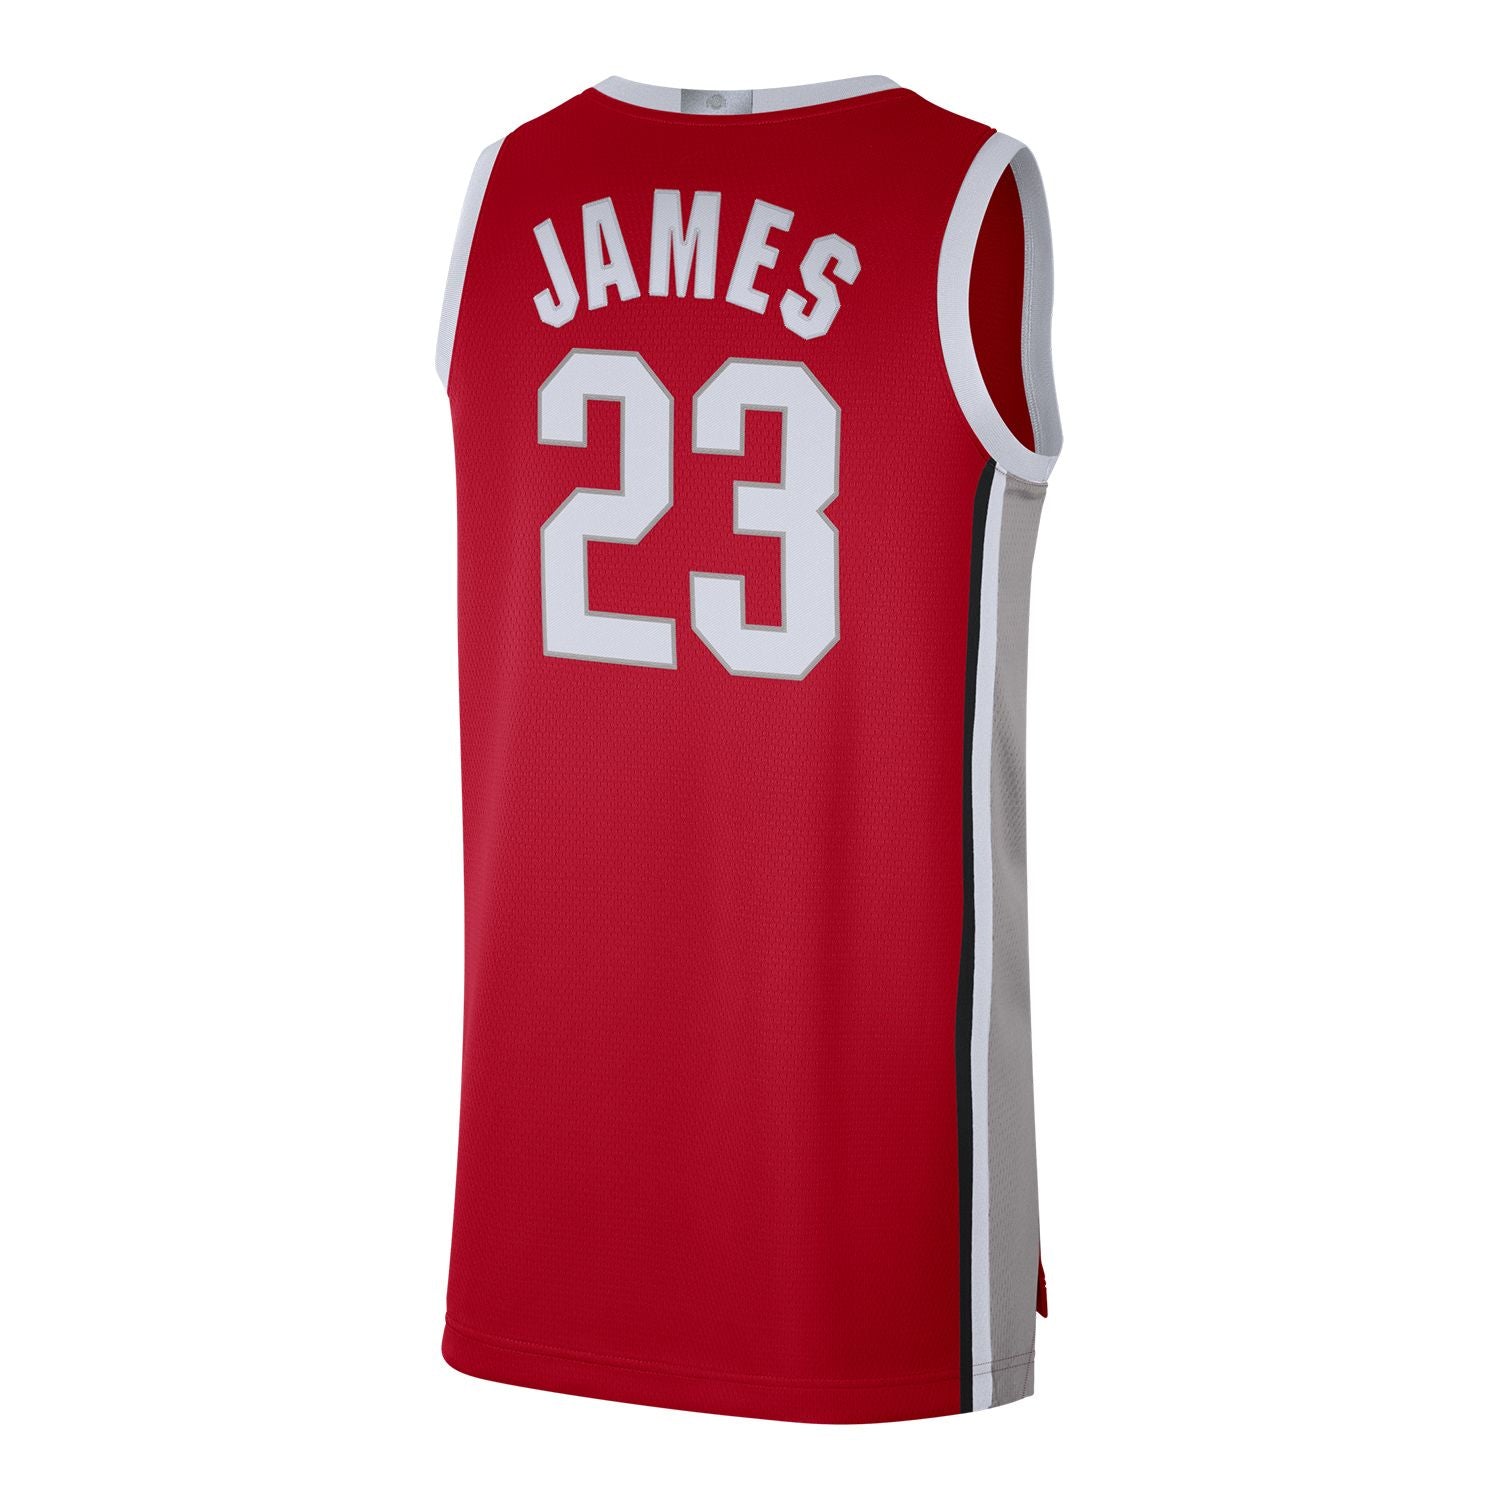 LeBron James Jerseys, Uniforms